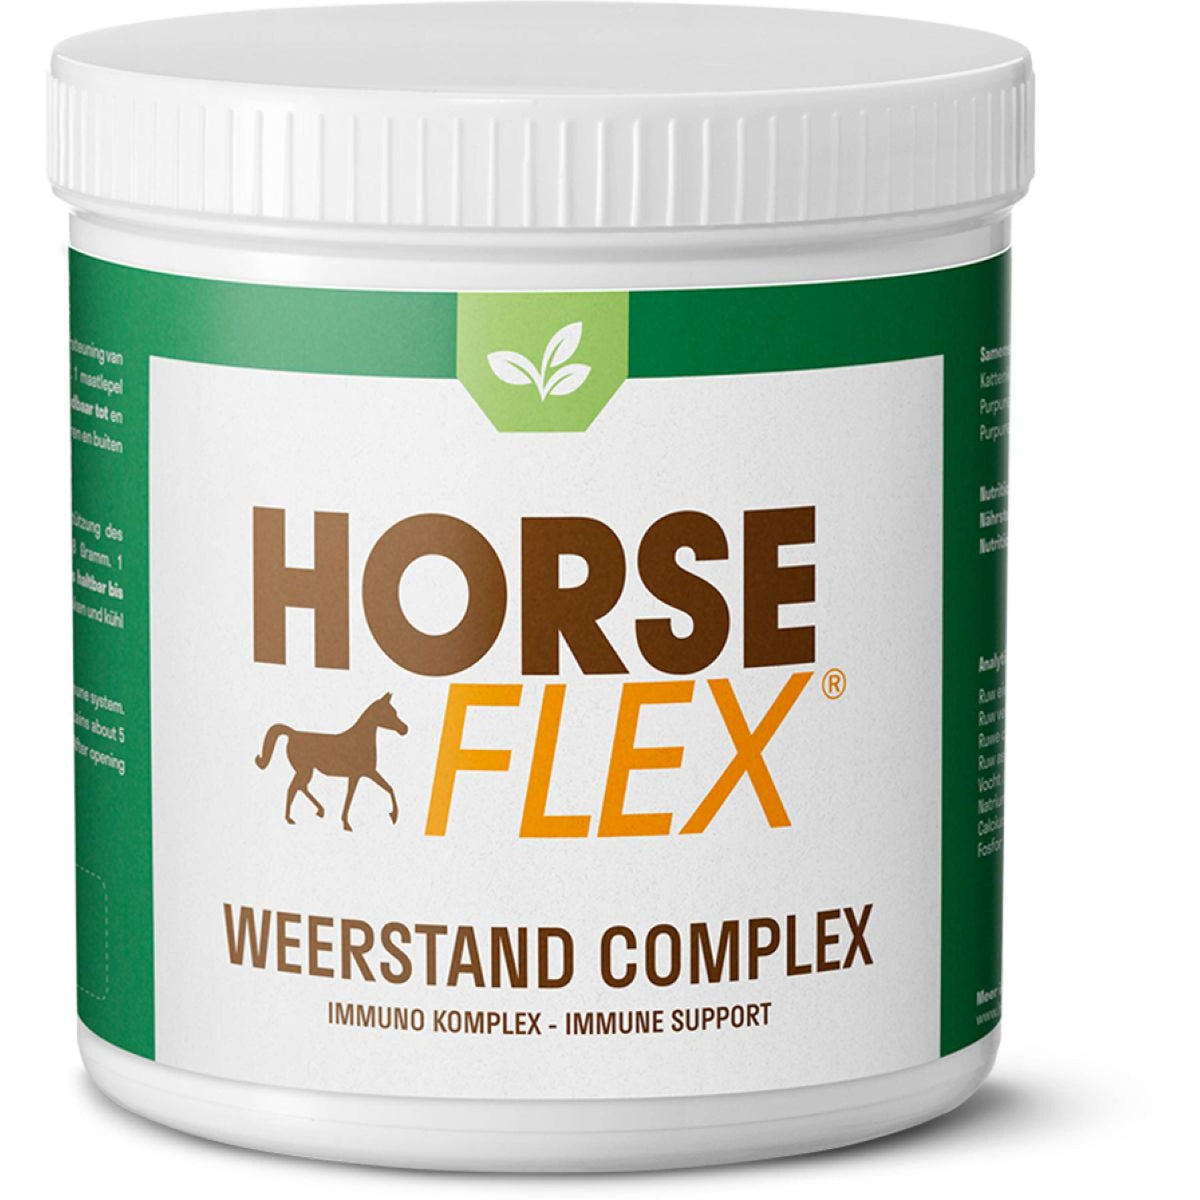 HorseFlex Complexe de résistance